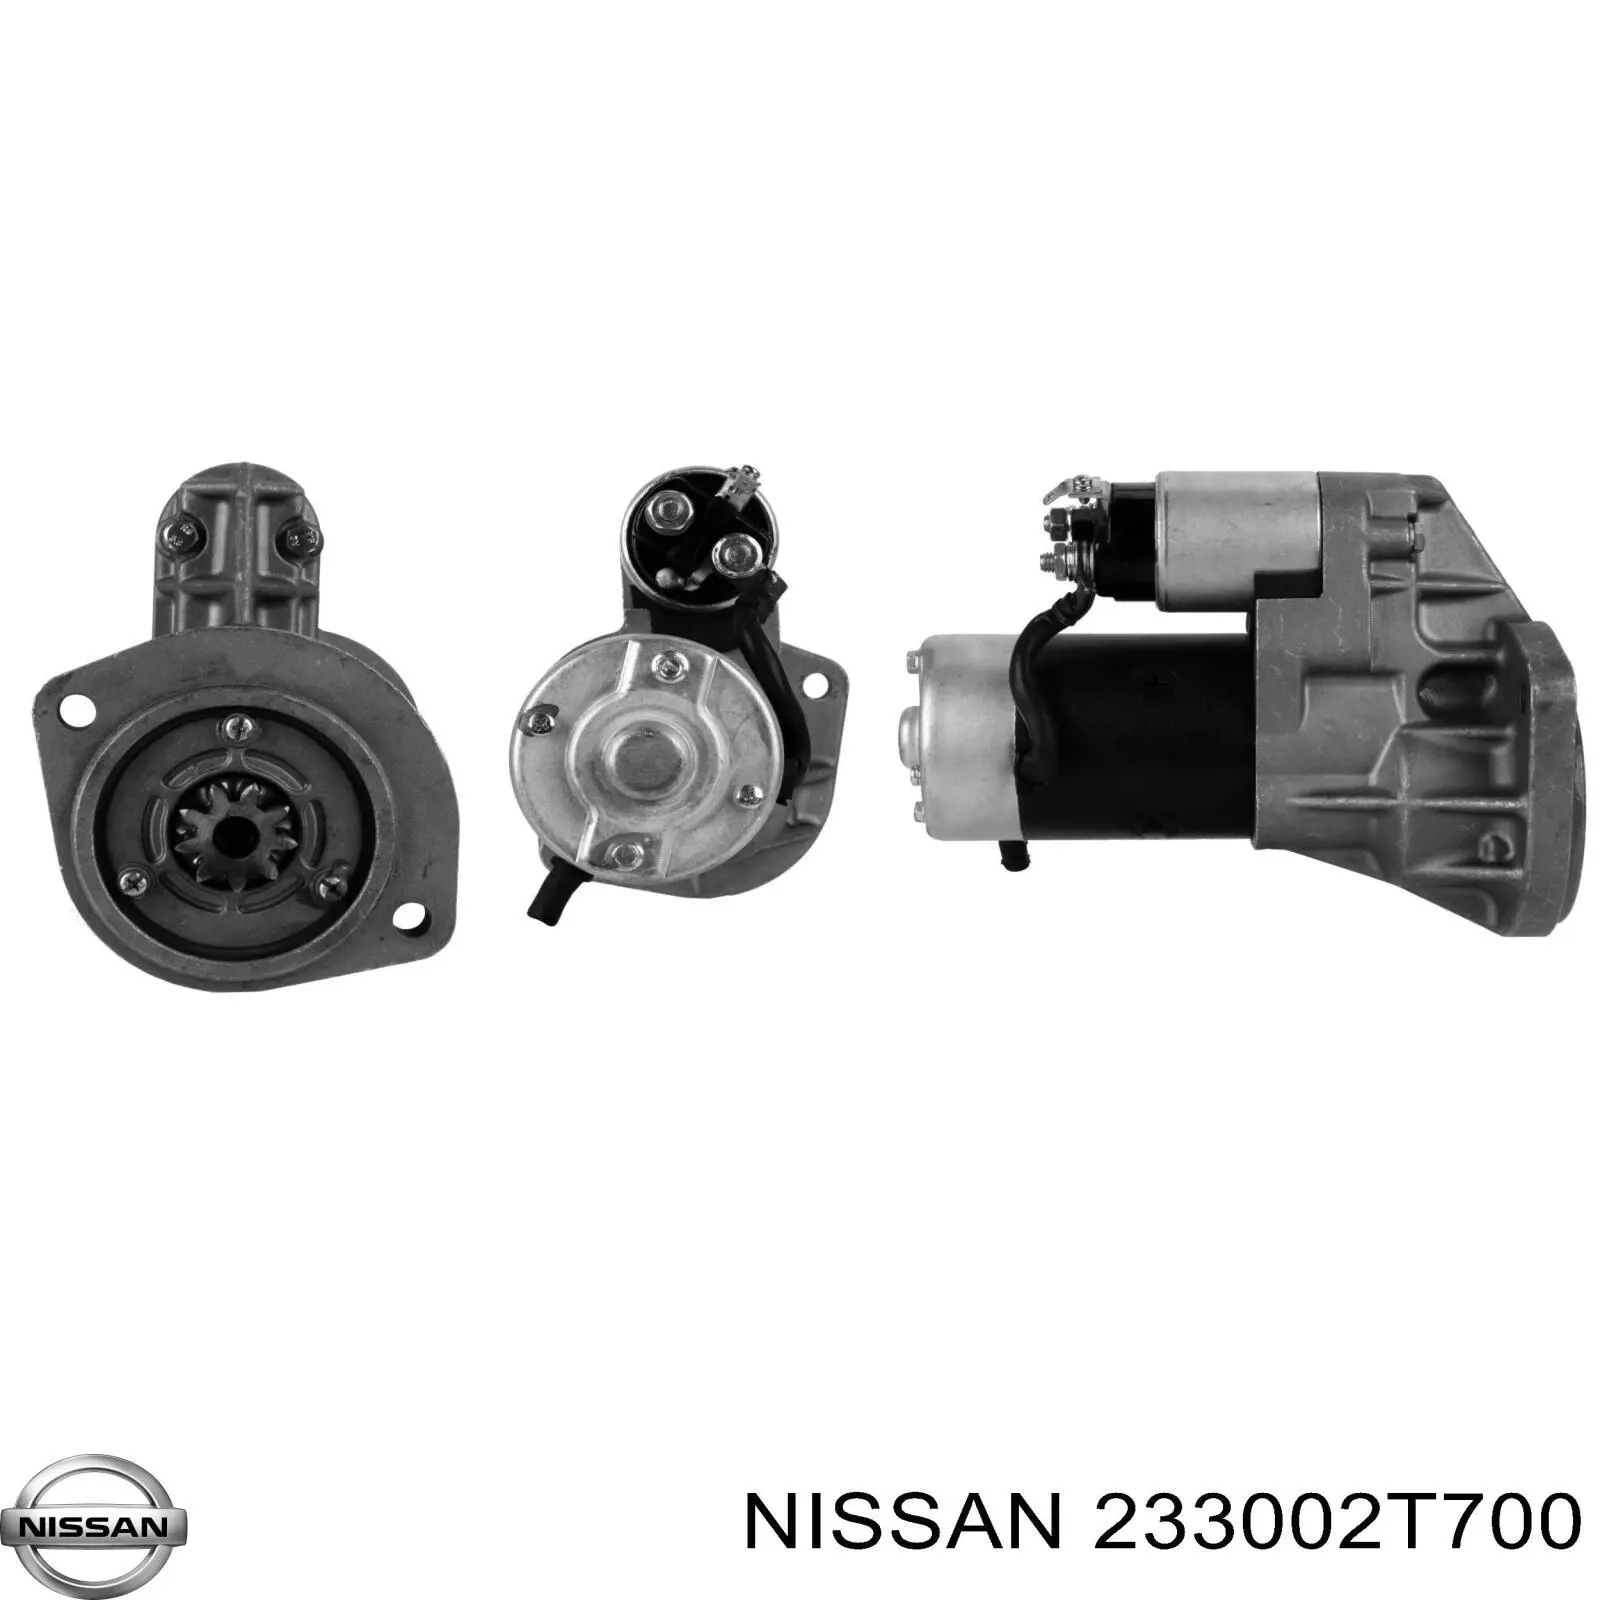 23300-2T700 Nissan motor de arranque